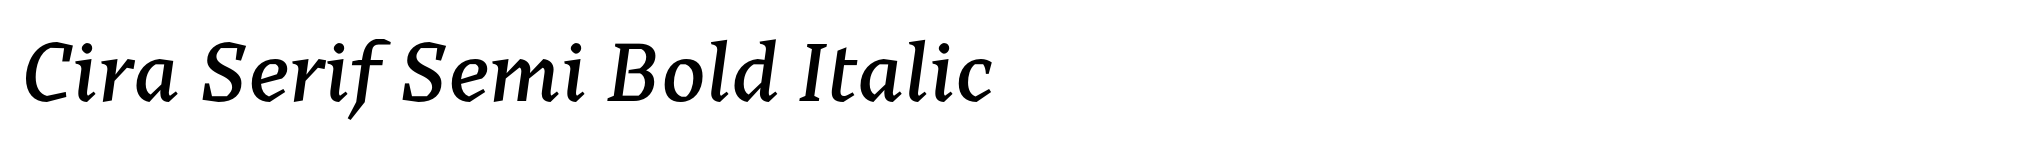 Cira Serif Semi Bold Italic image